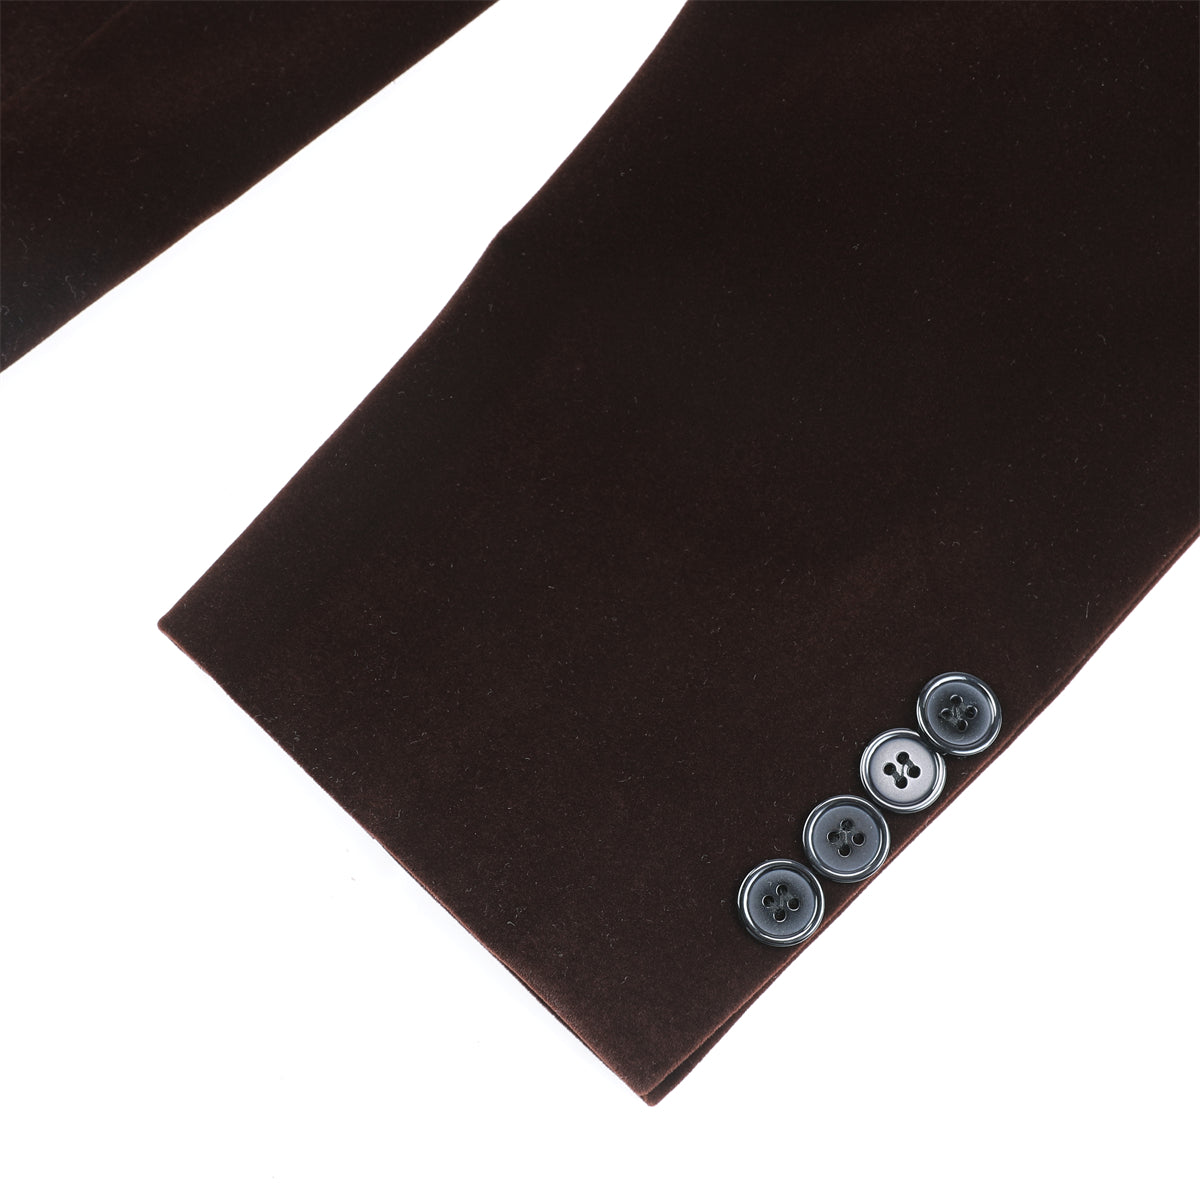 Slim Fit 2-Piece Coffee Pleuche Velvet Tuxedo Suit